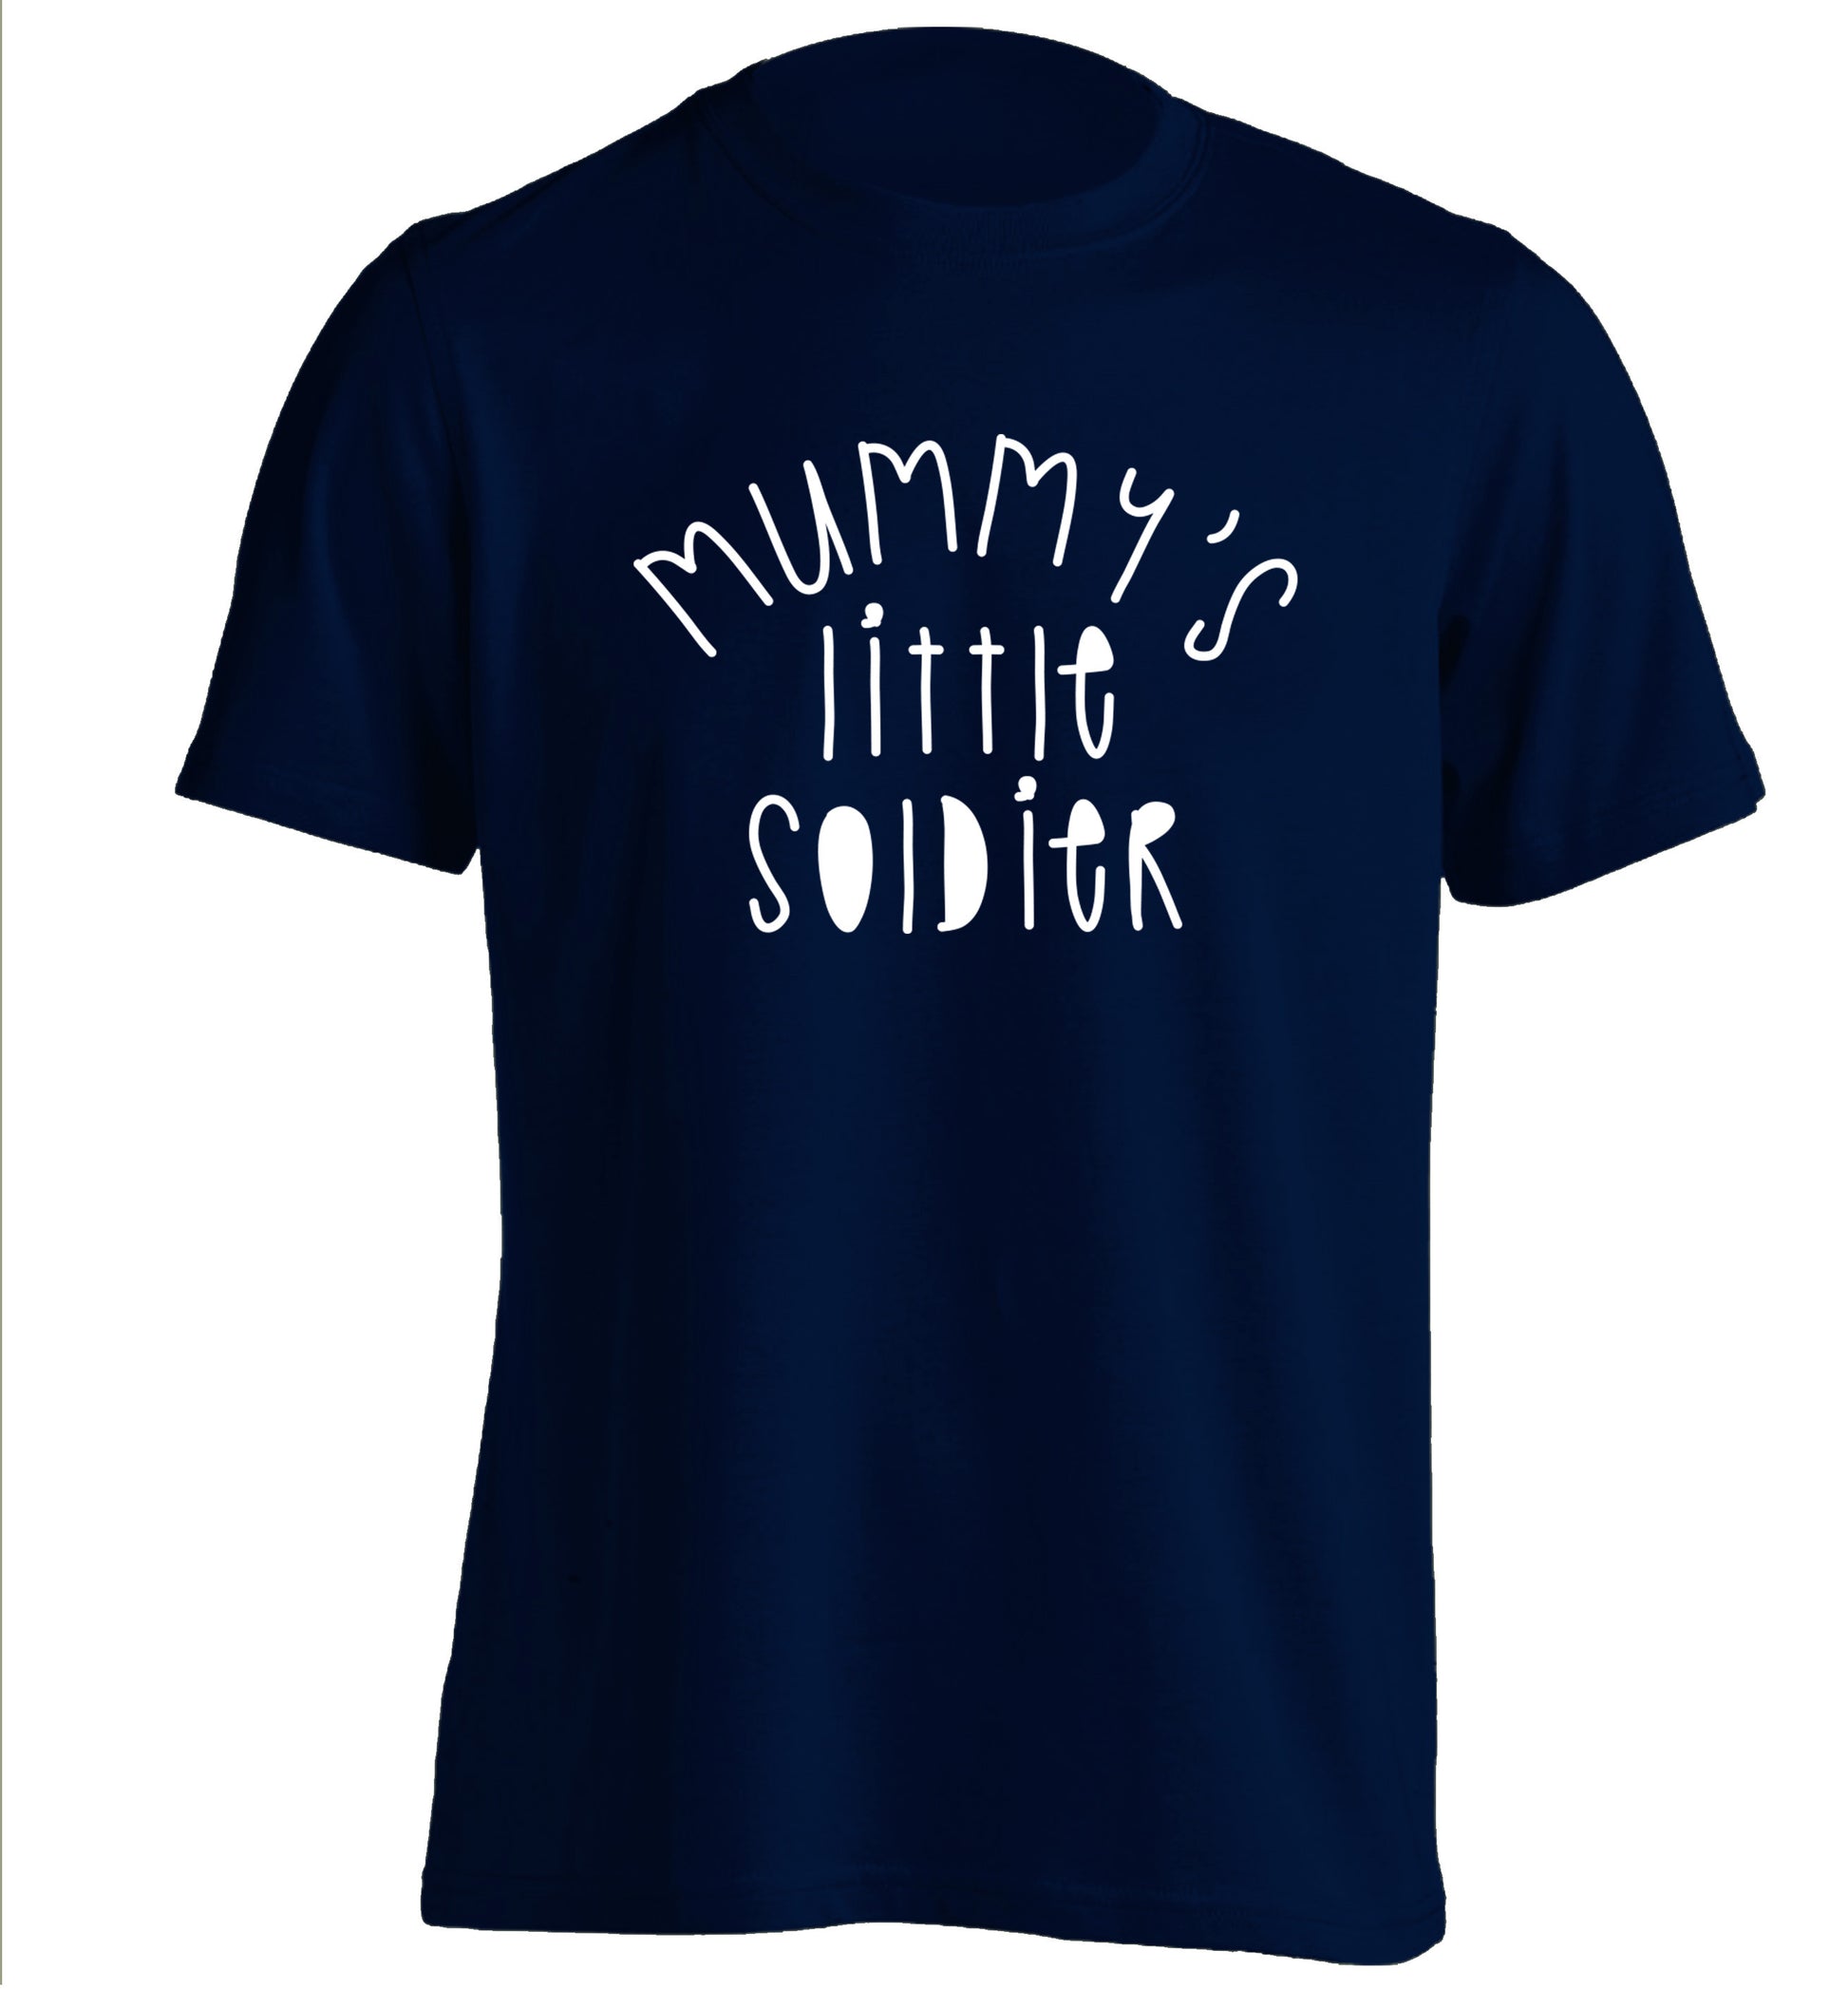 Mummy's little soldier adults unisex navy Tshirt 2XL